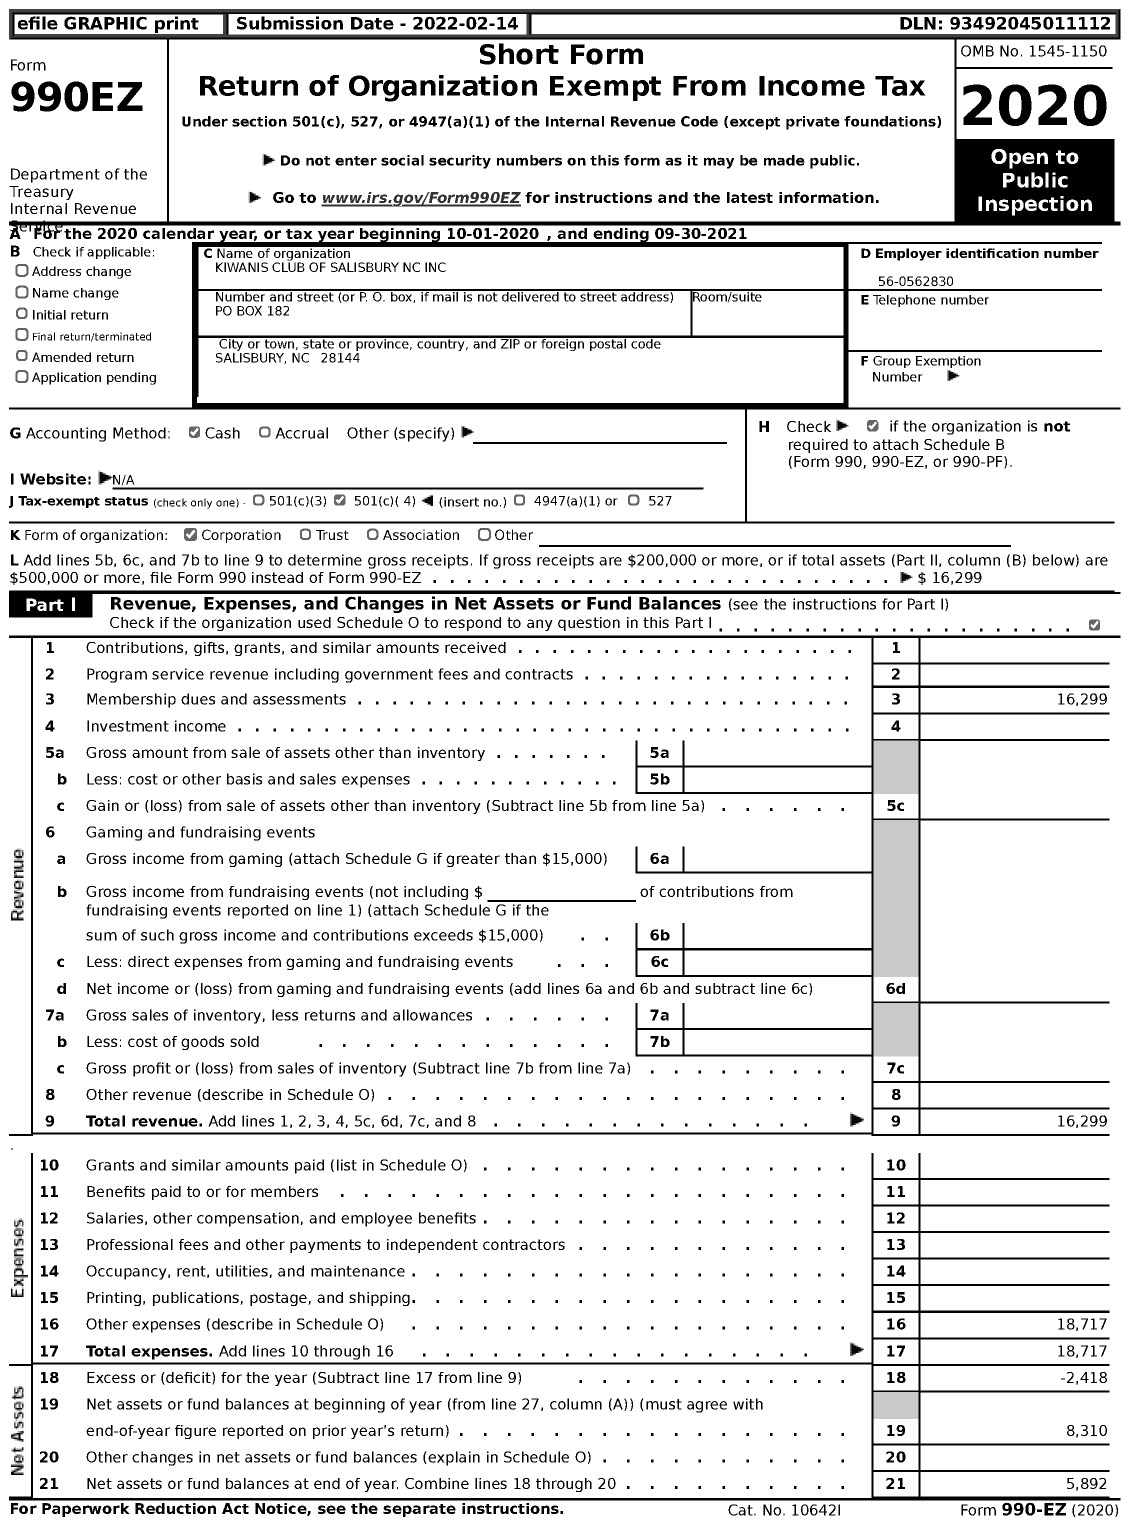 Image of first page of 2020 Form 990EZ for Kiwanis International - K00349 Salisbury